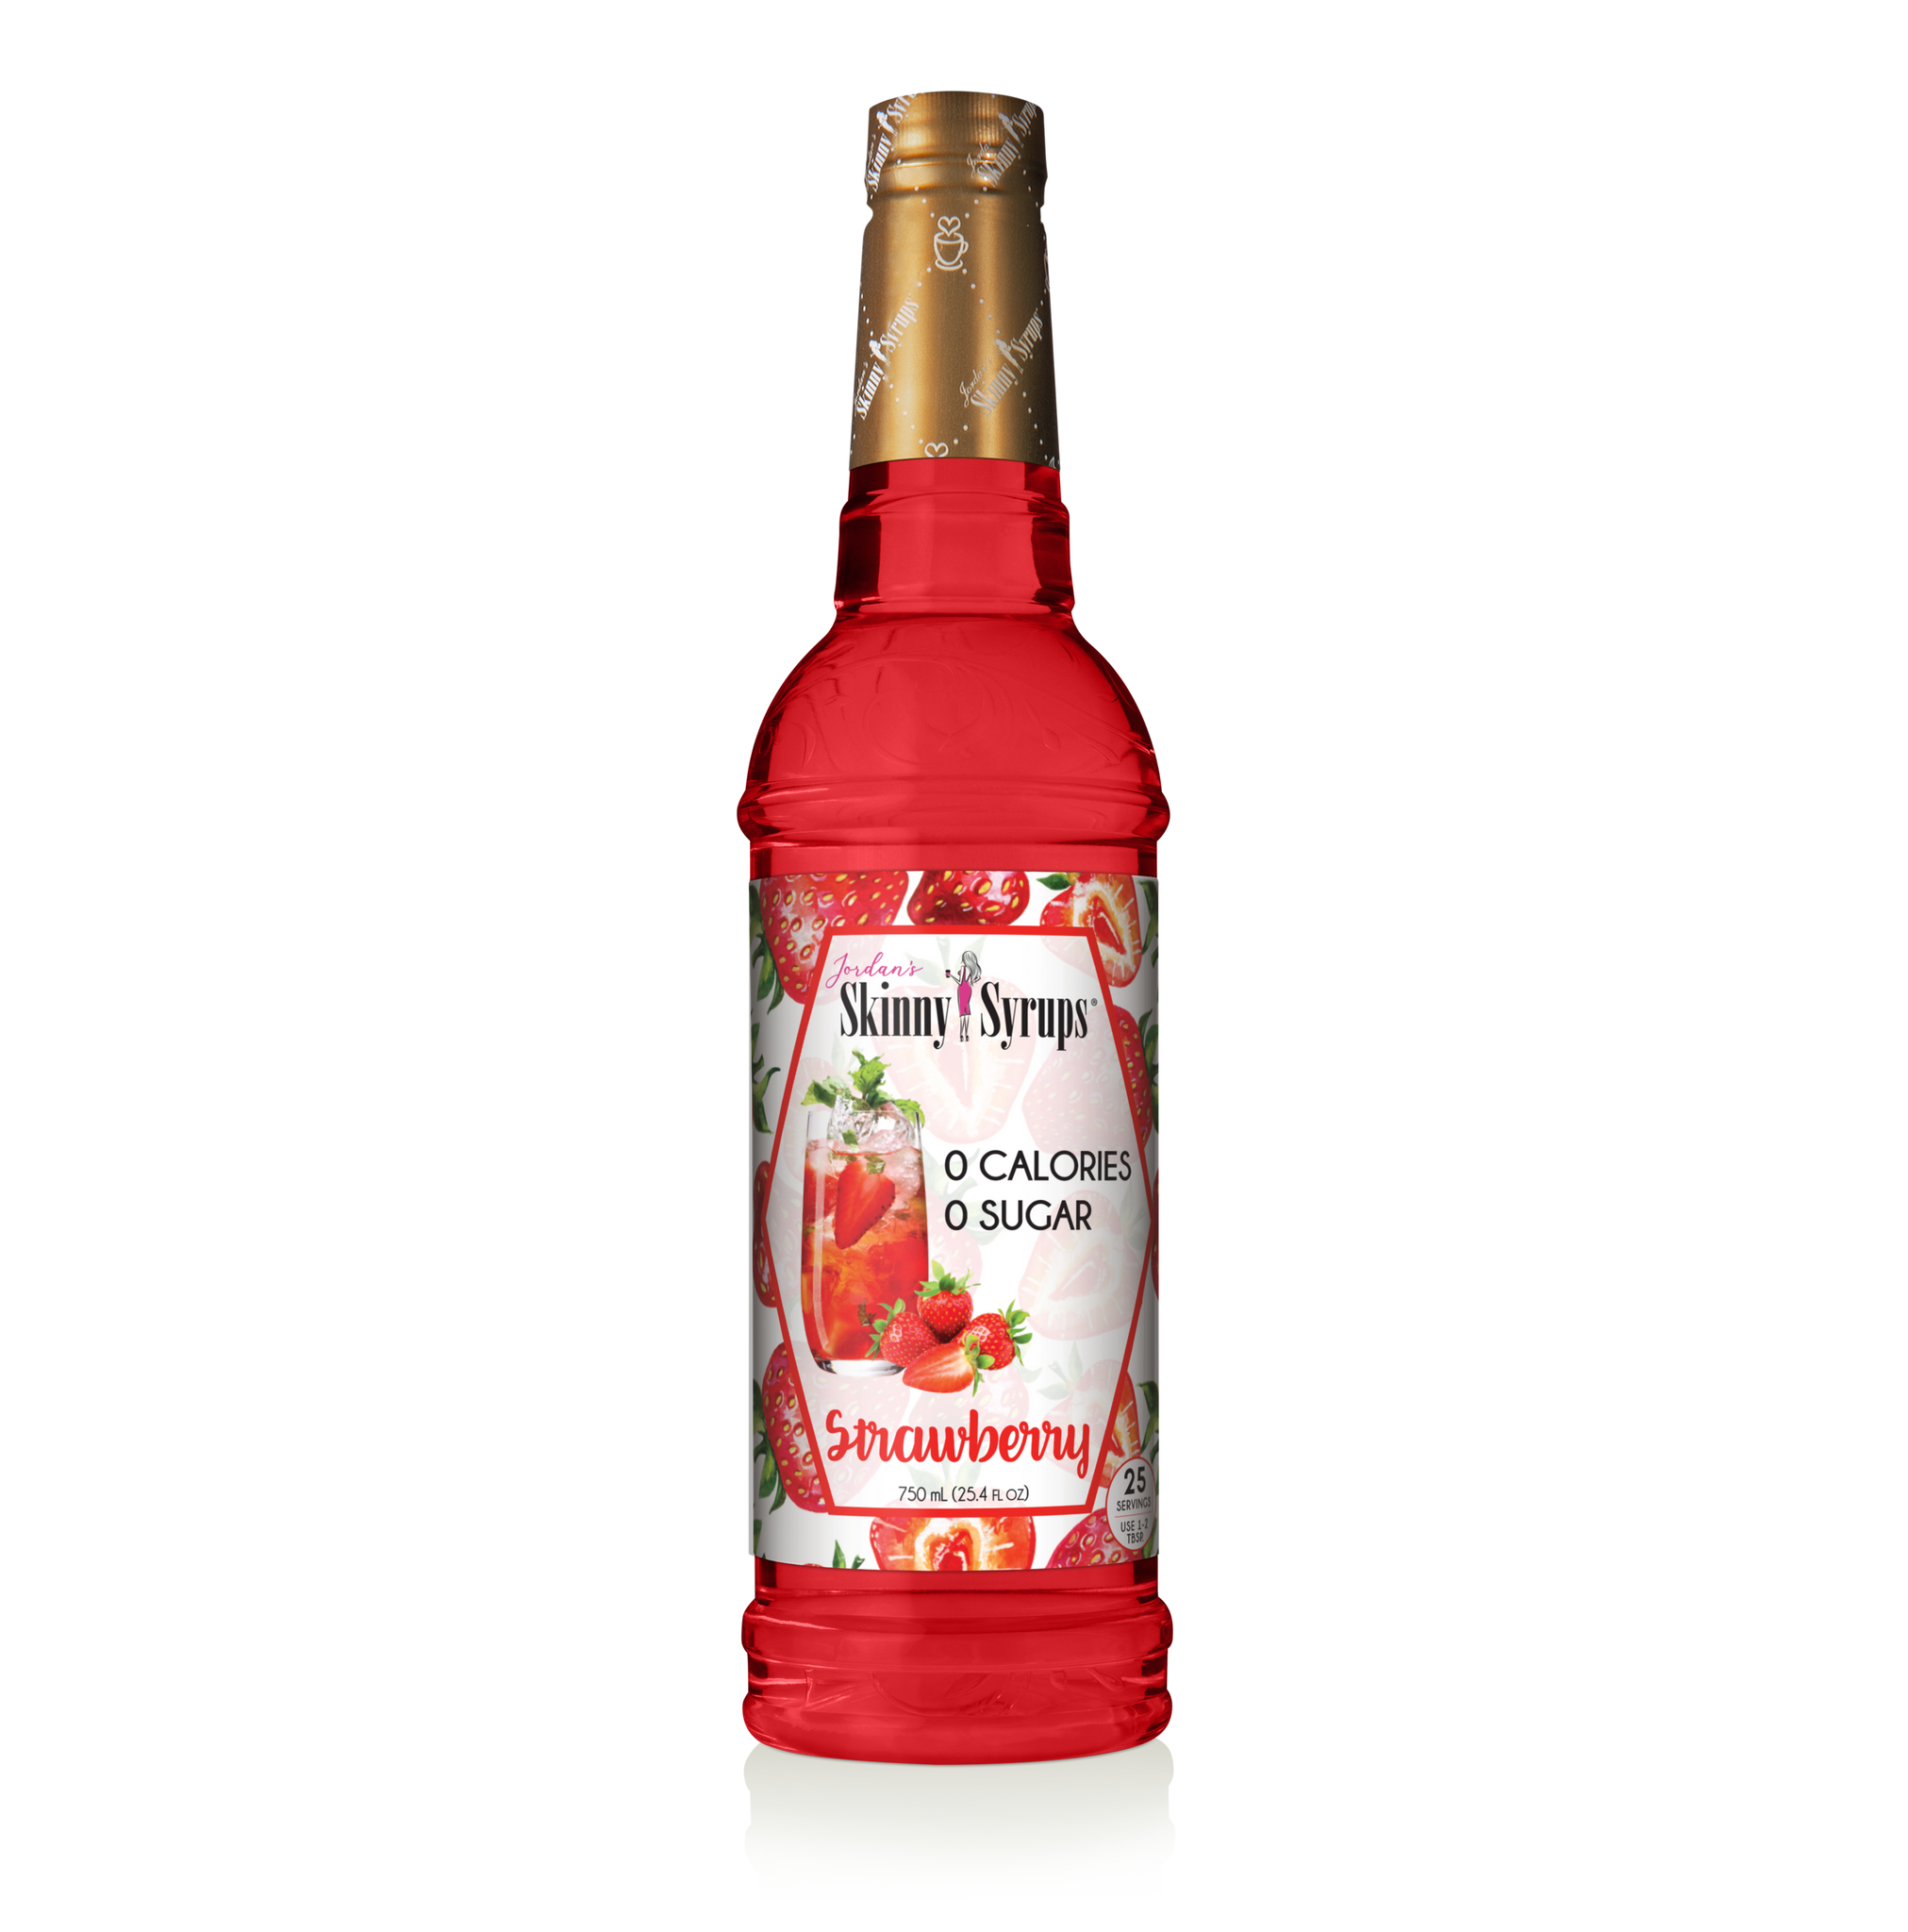 Skinny Strawberry Syrup